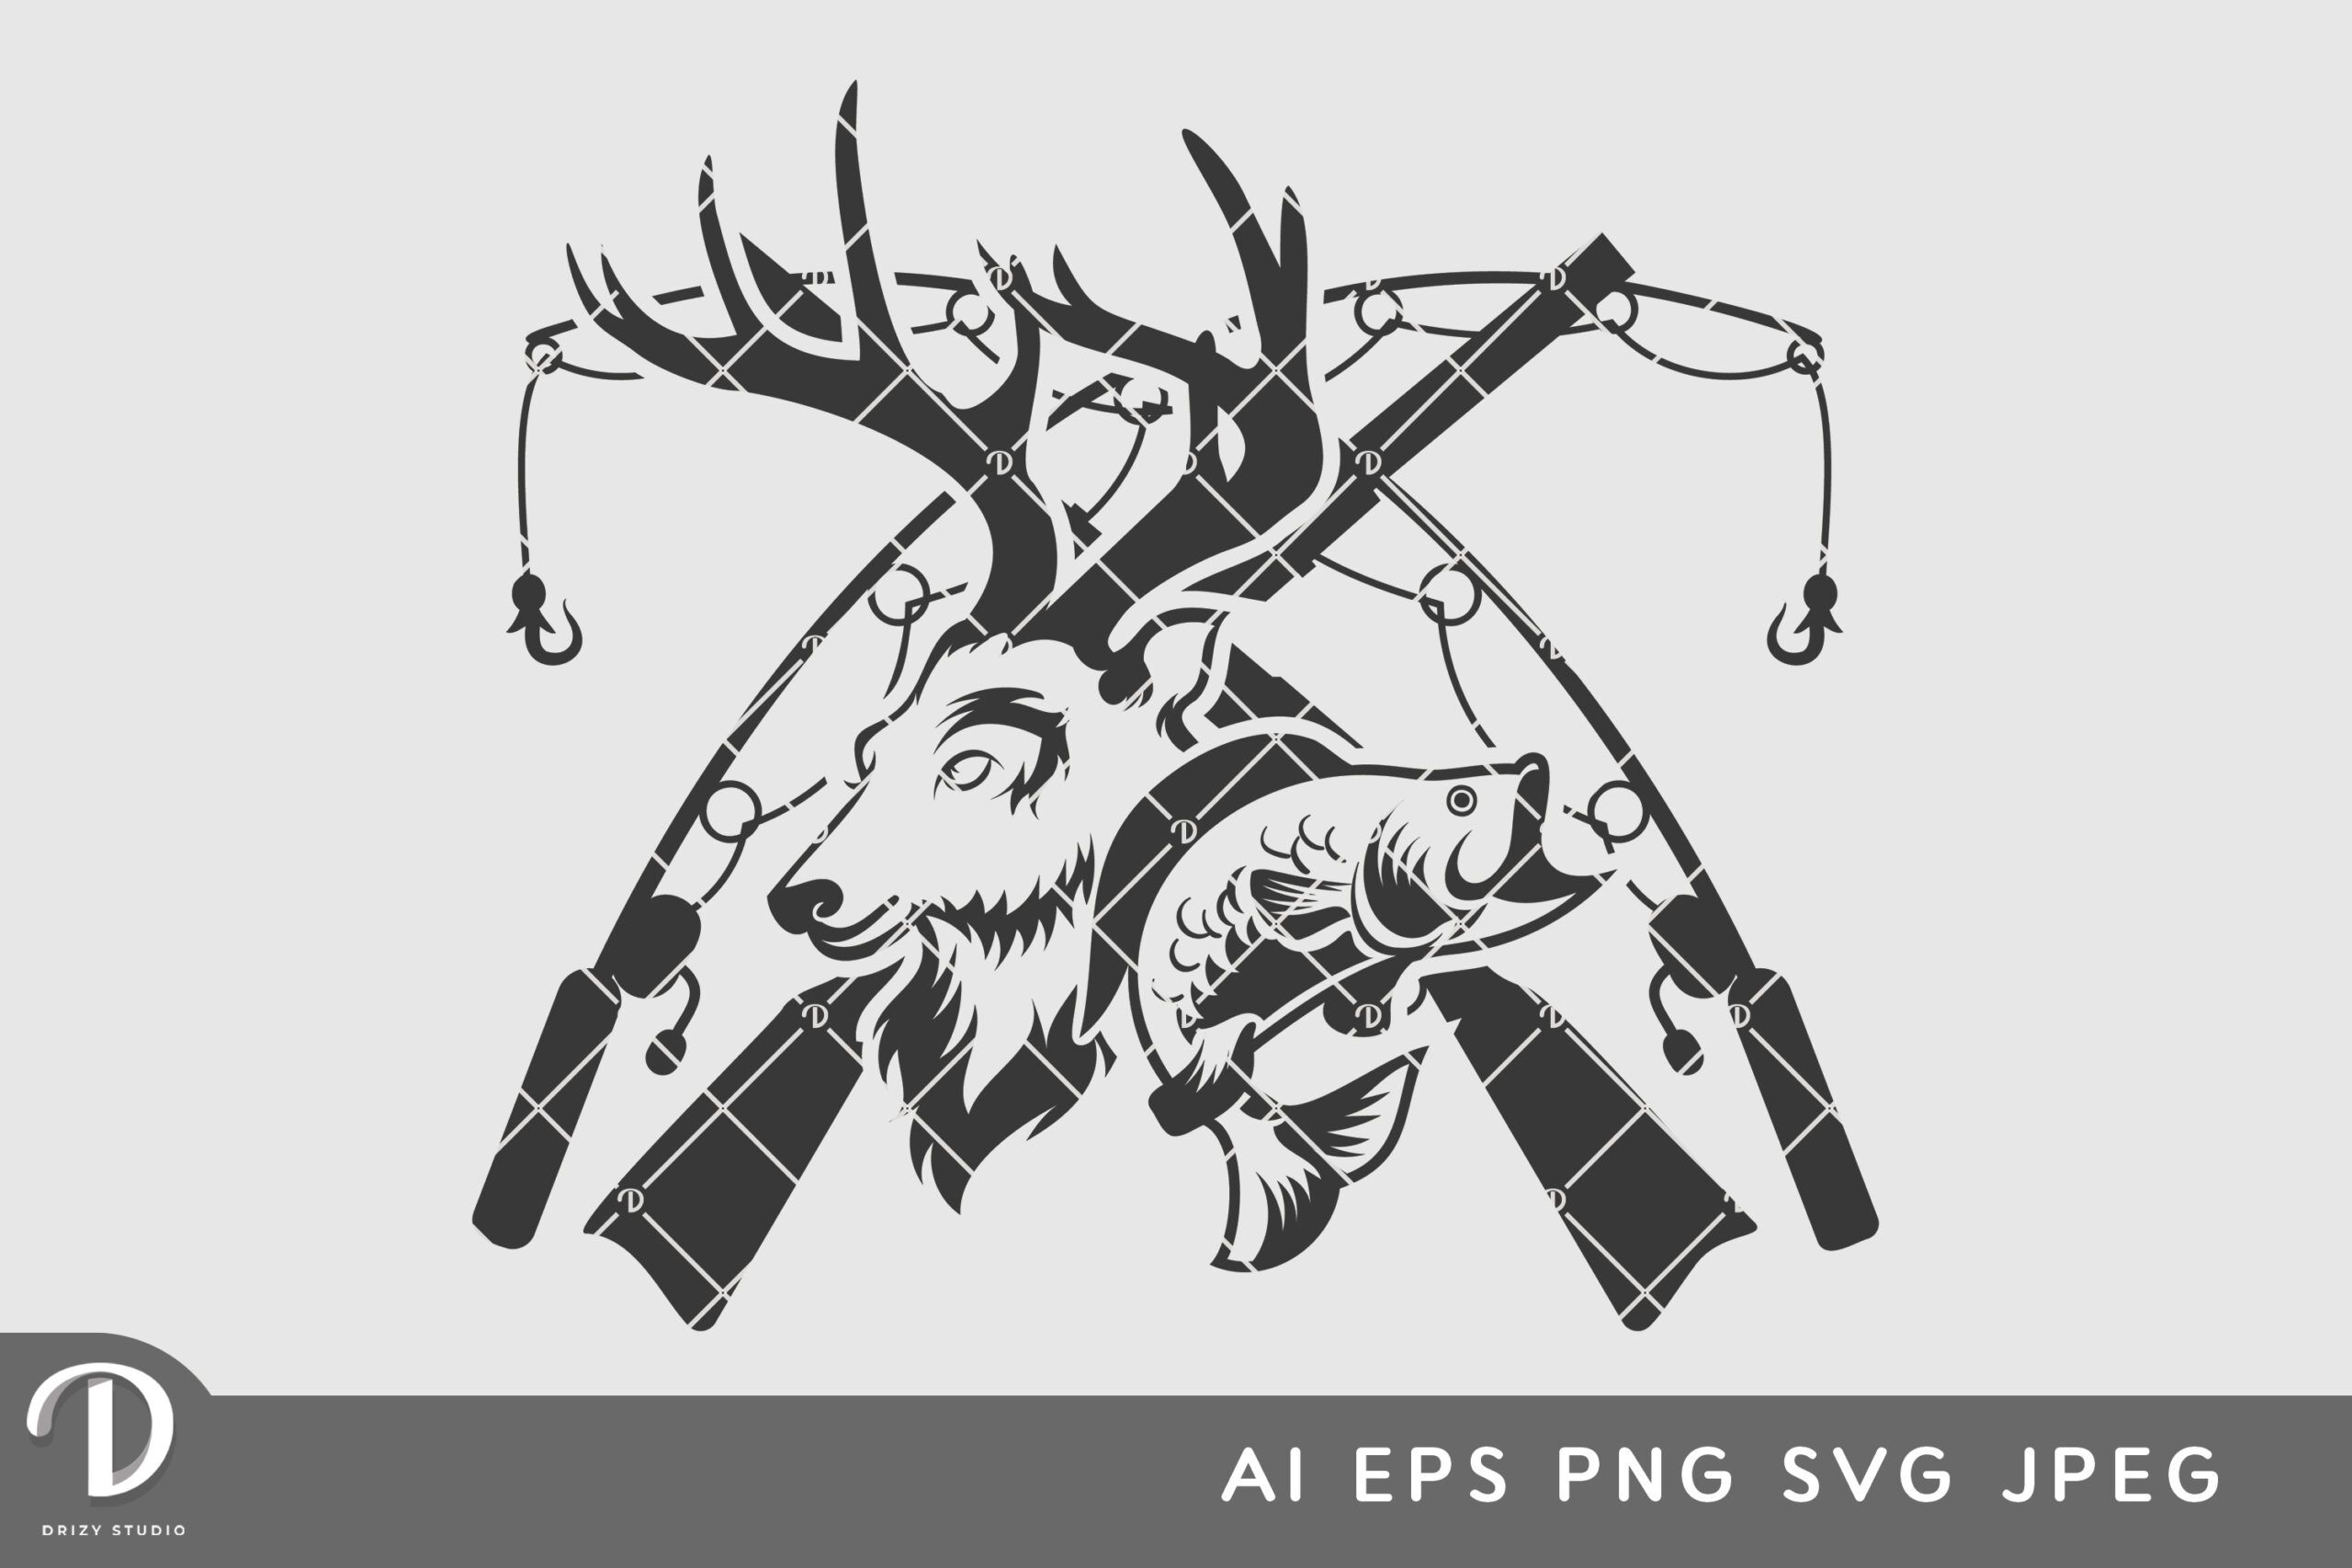 Hunting and Fishing SVG - Drizy Studio